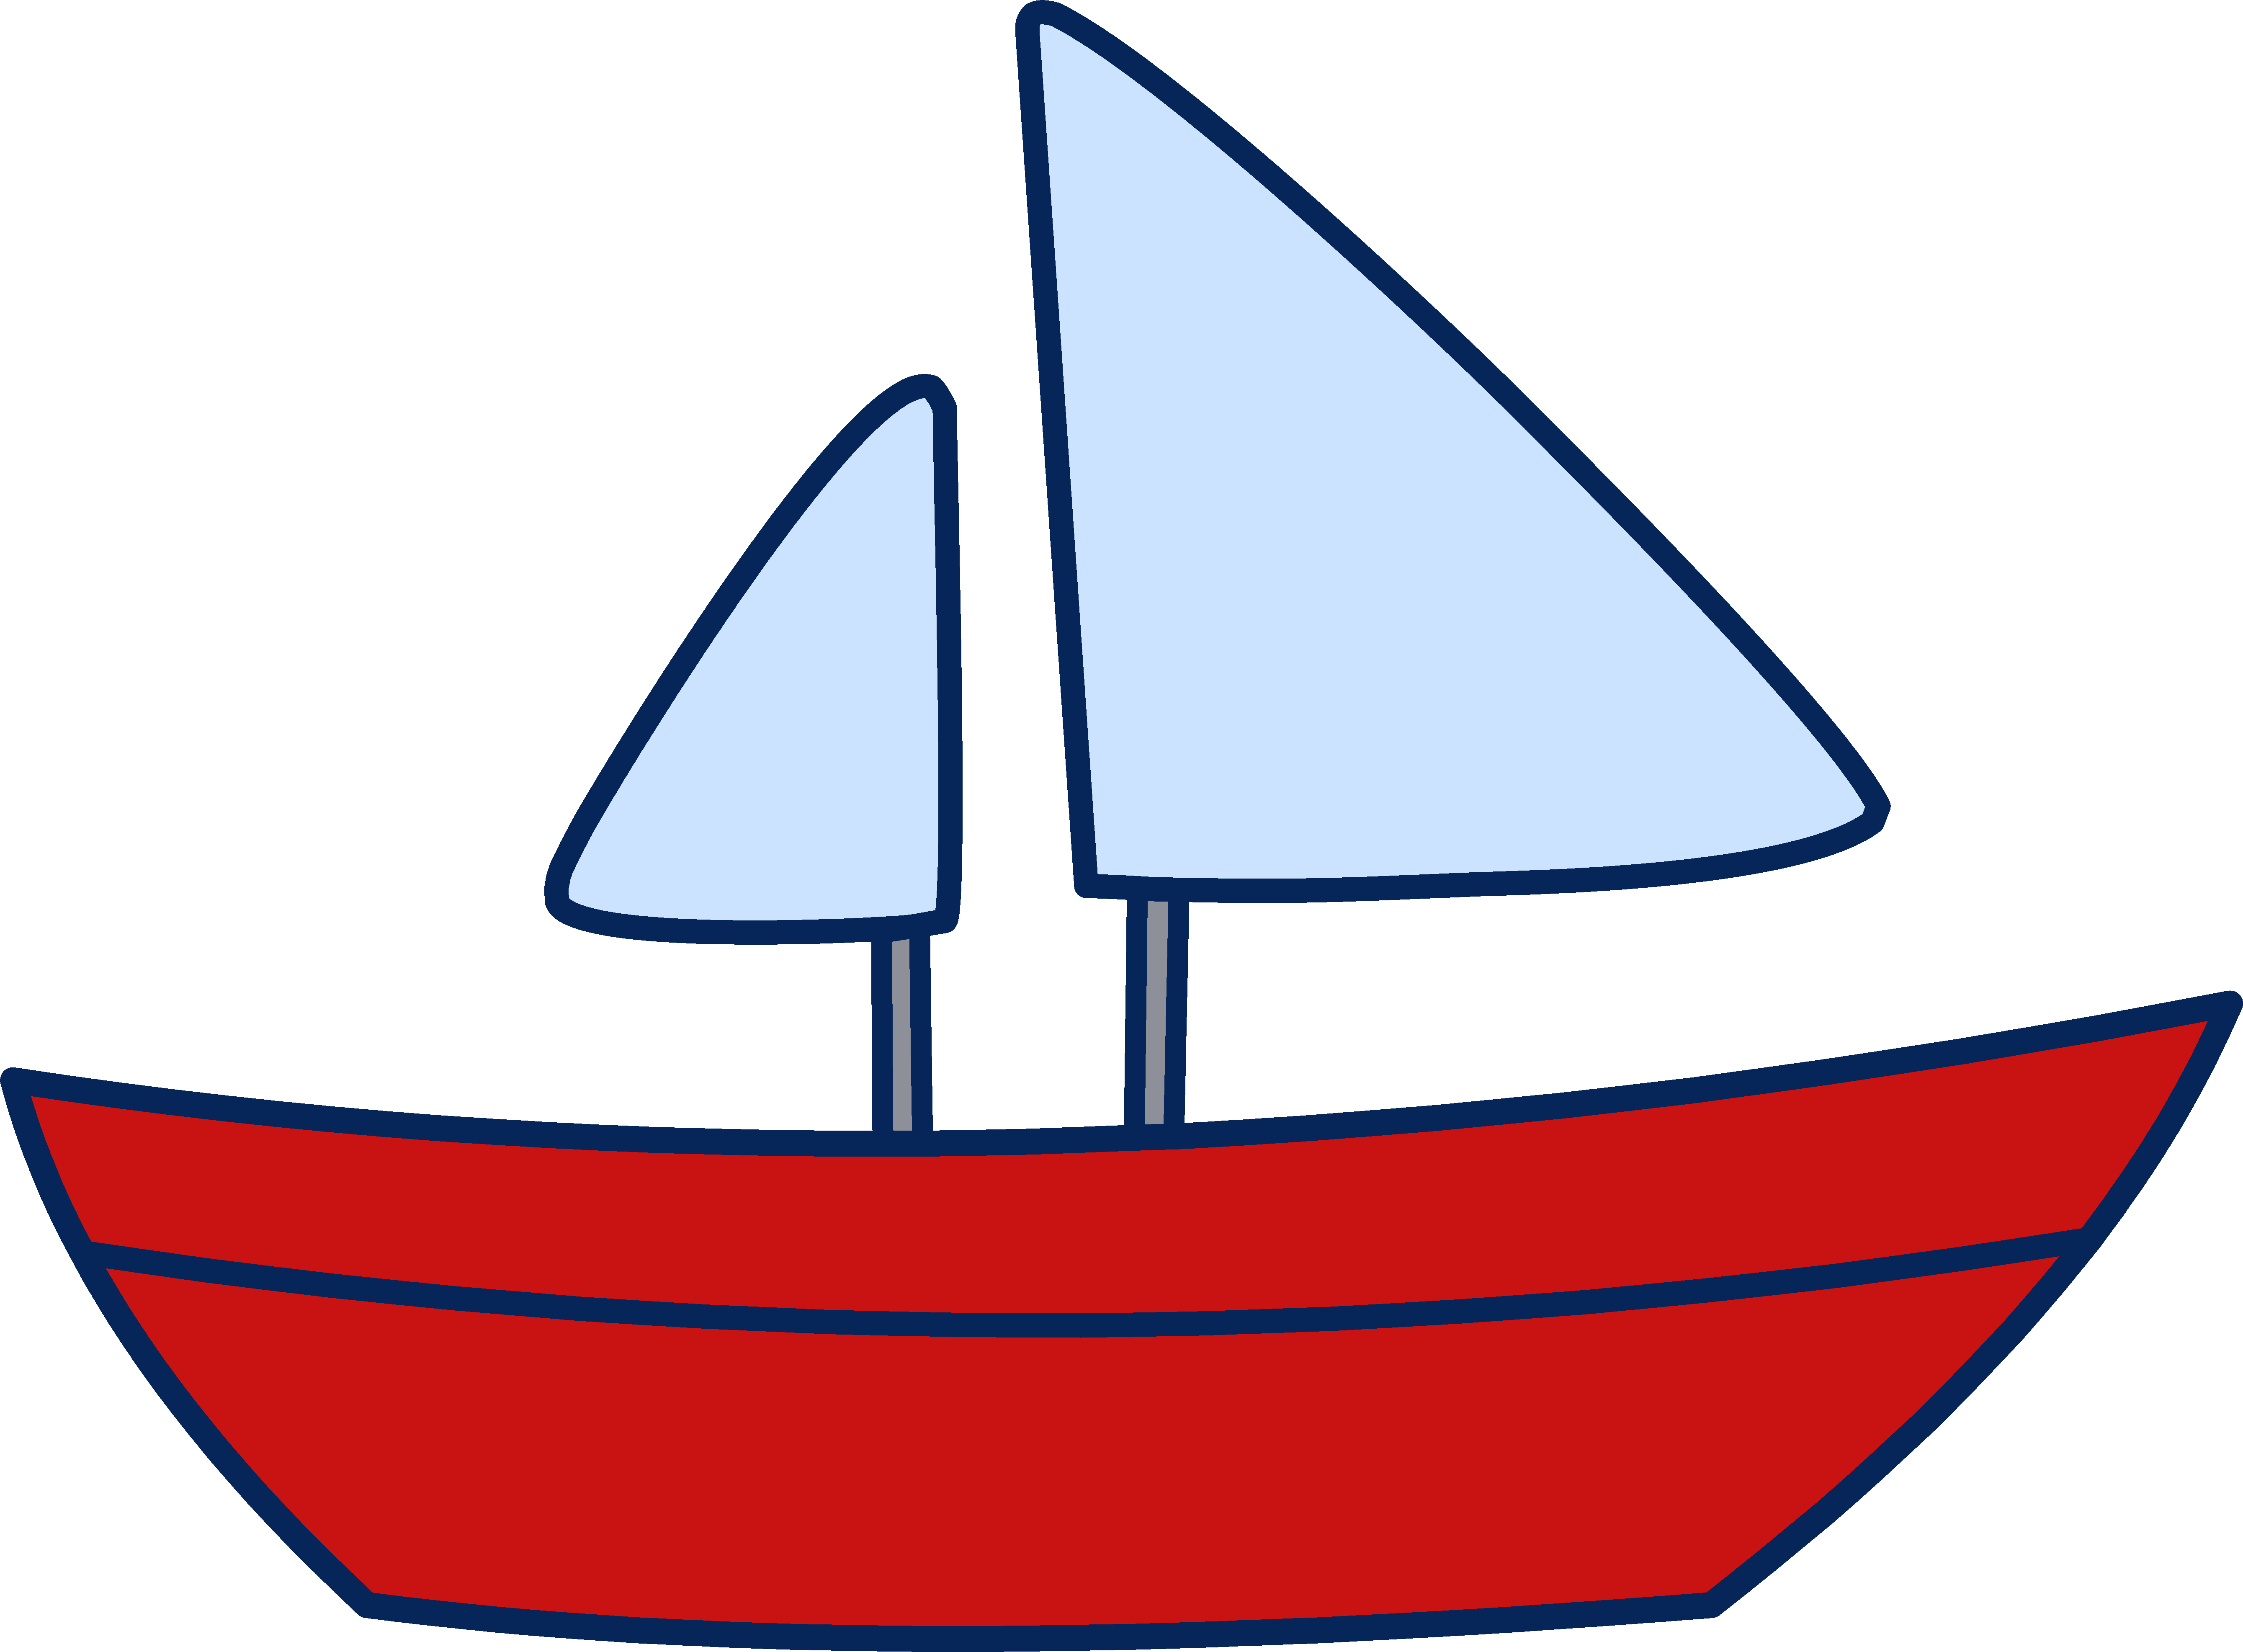 Sport fishing boat clip art f